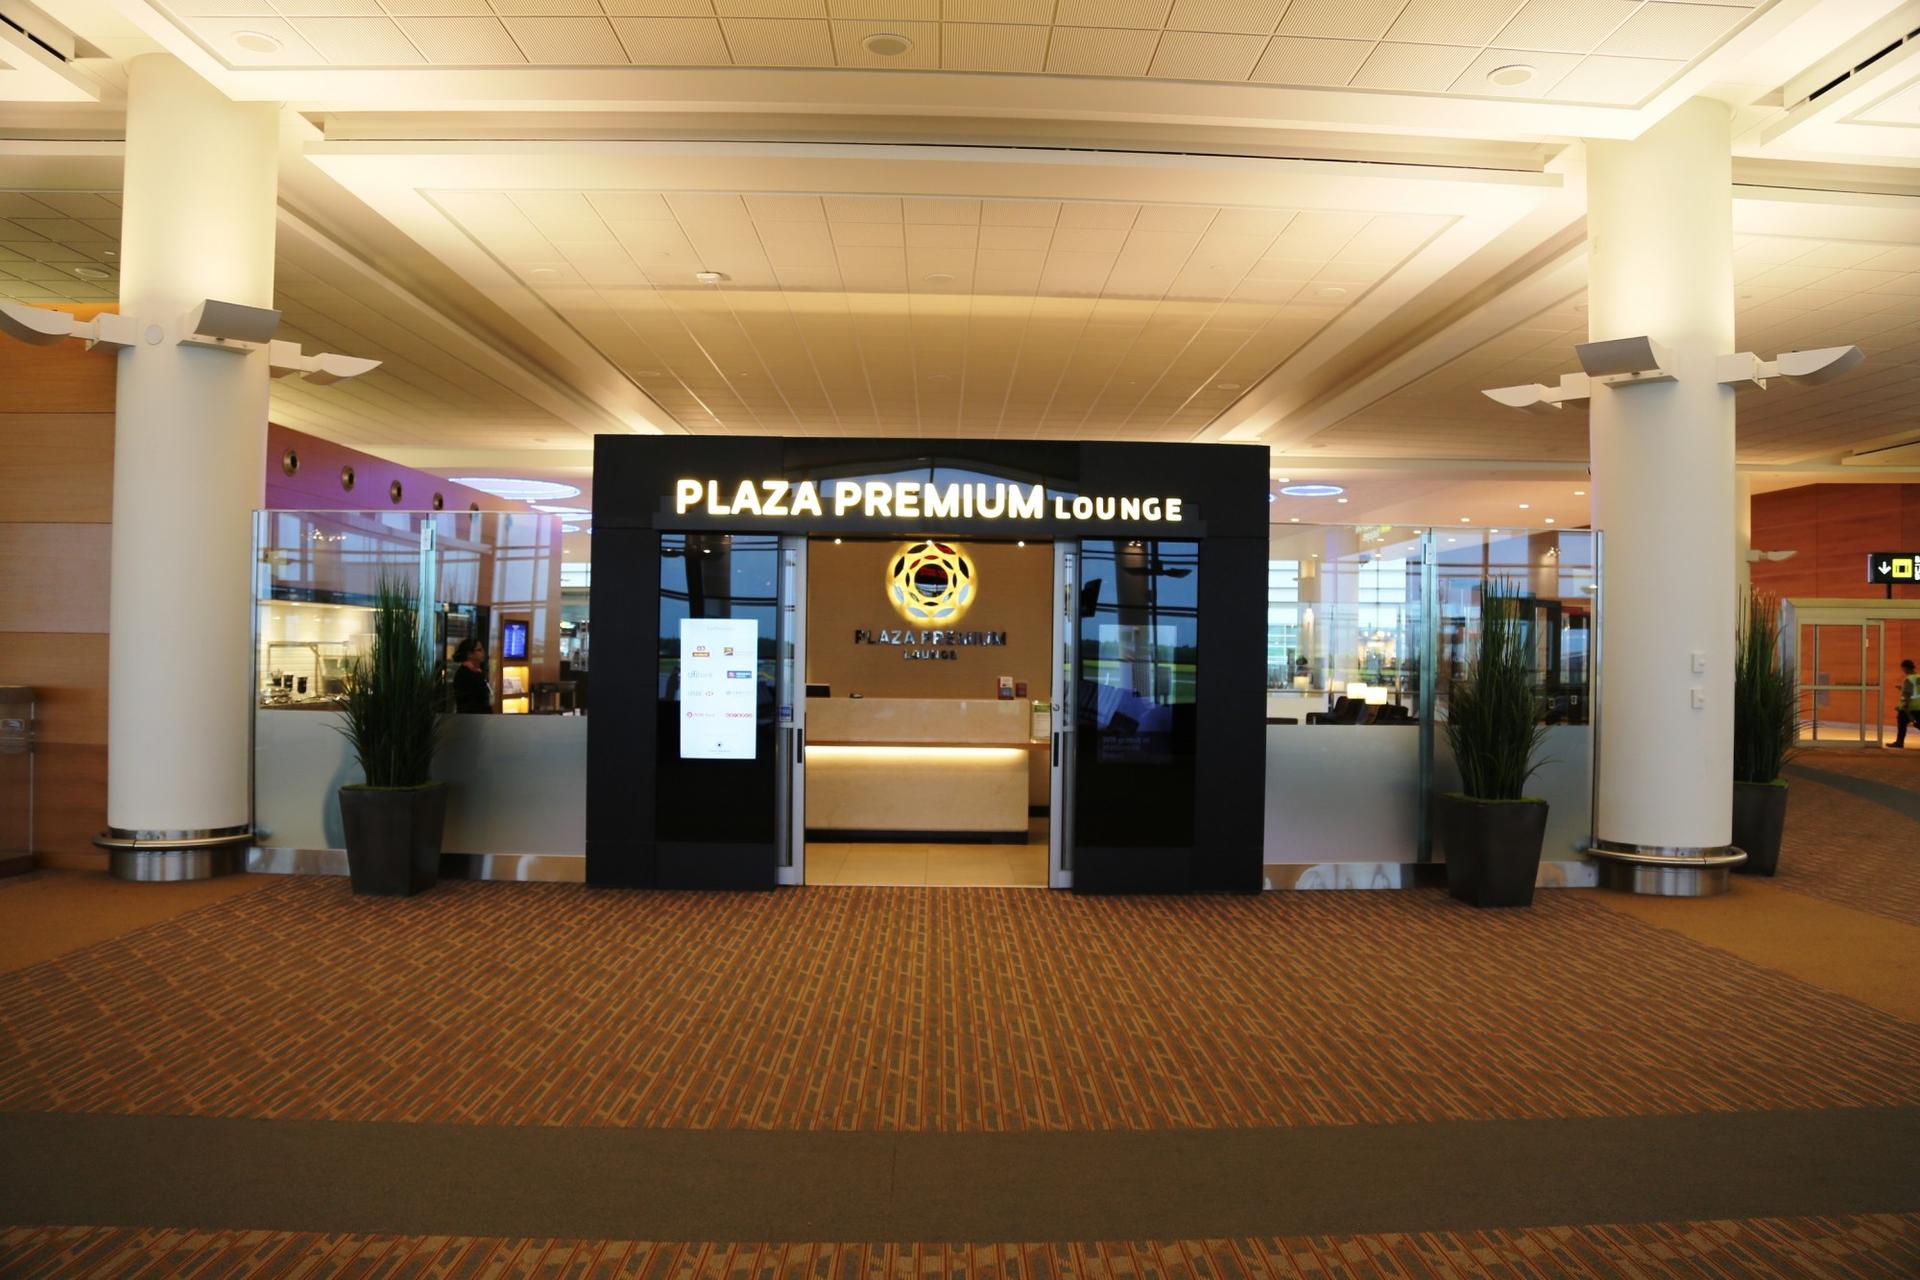 Plaza Premium Lounge image 33 of 45